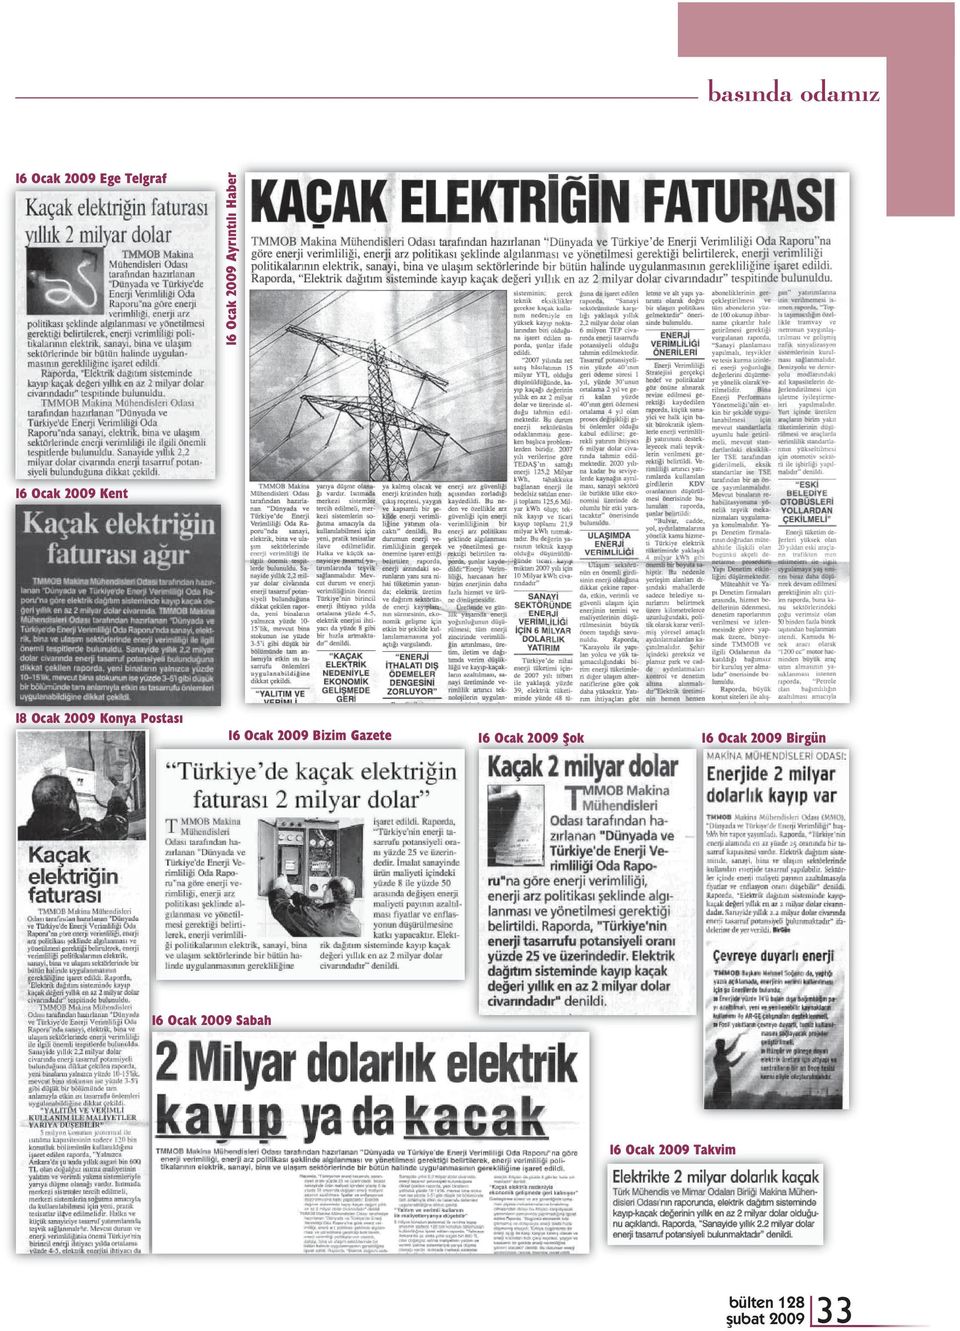 16 Ocak 2009 Bizim Gazete 16 Ocak 2009 Şok 16 Ocak